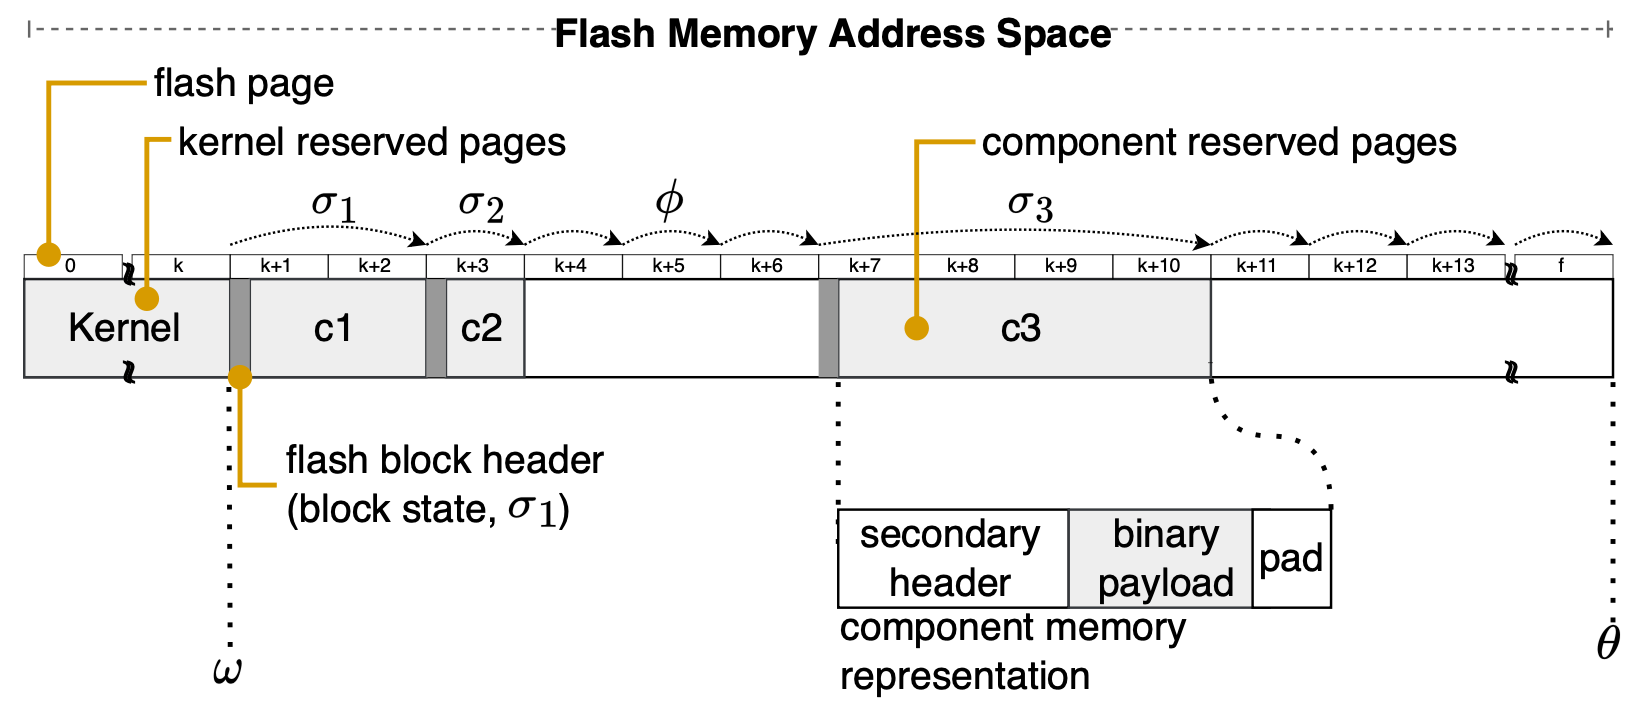 ConceptOS flash memory address space format